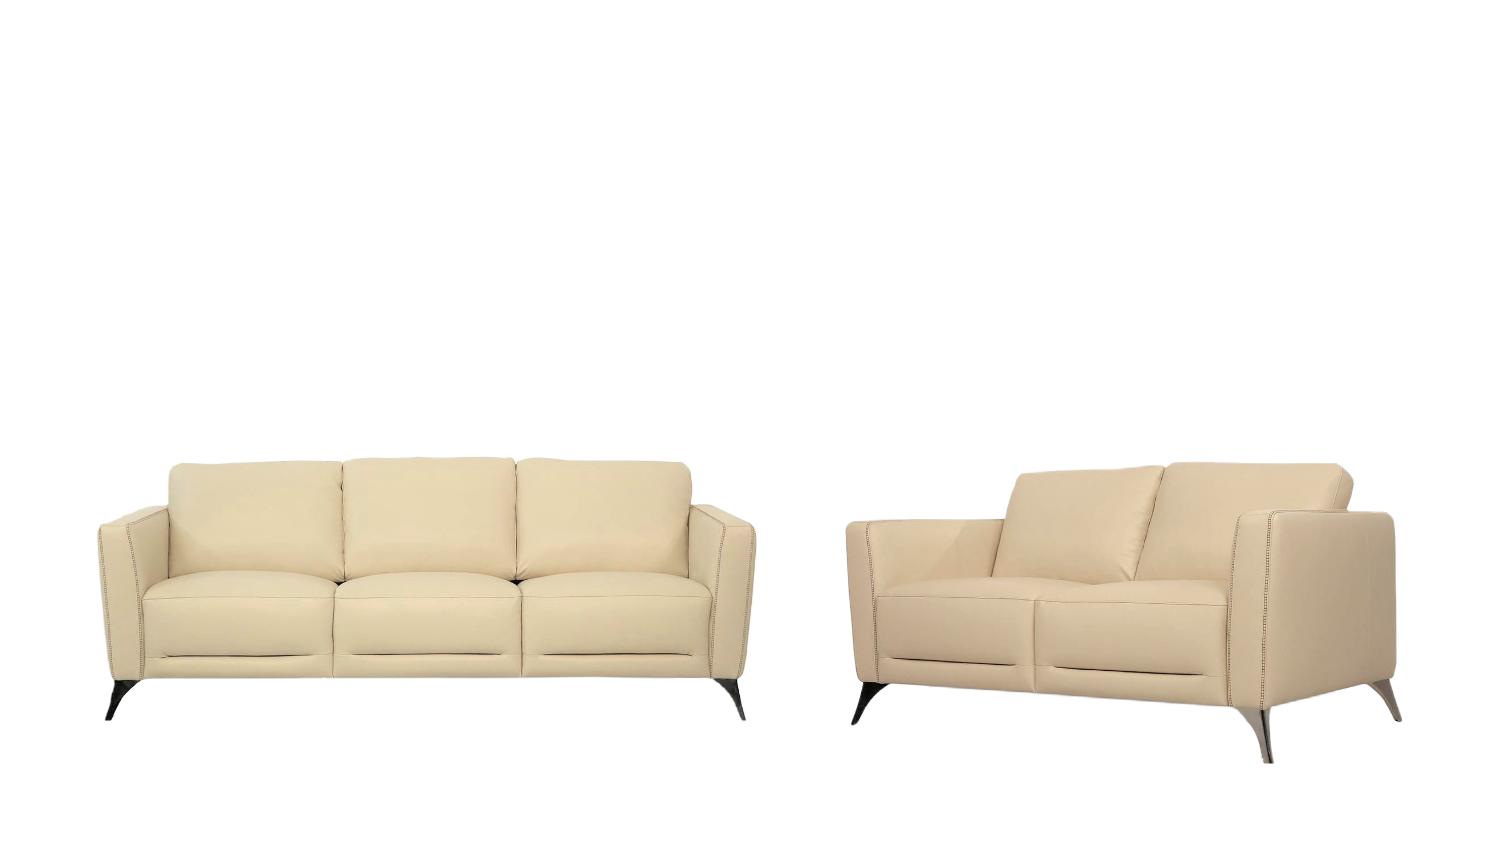 Transitional Sofa and Loveseat Set Malaga 55005-2pcs in Cream Leather